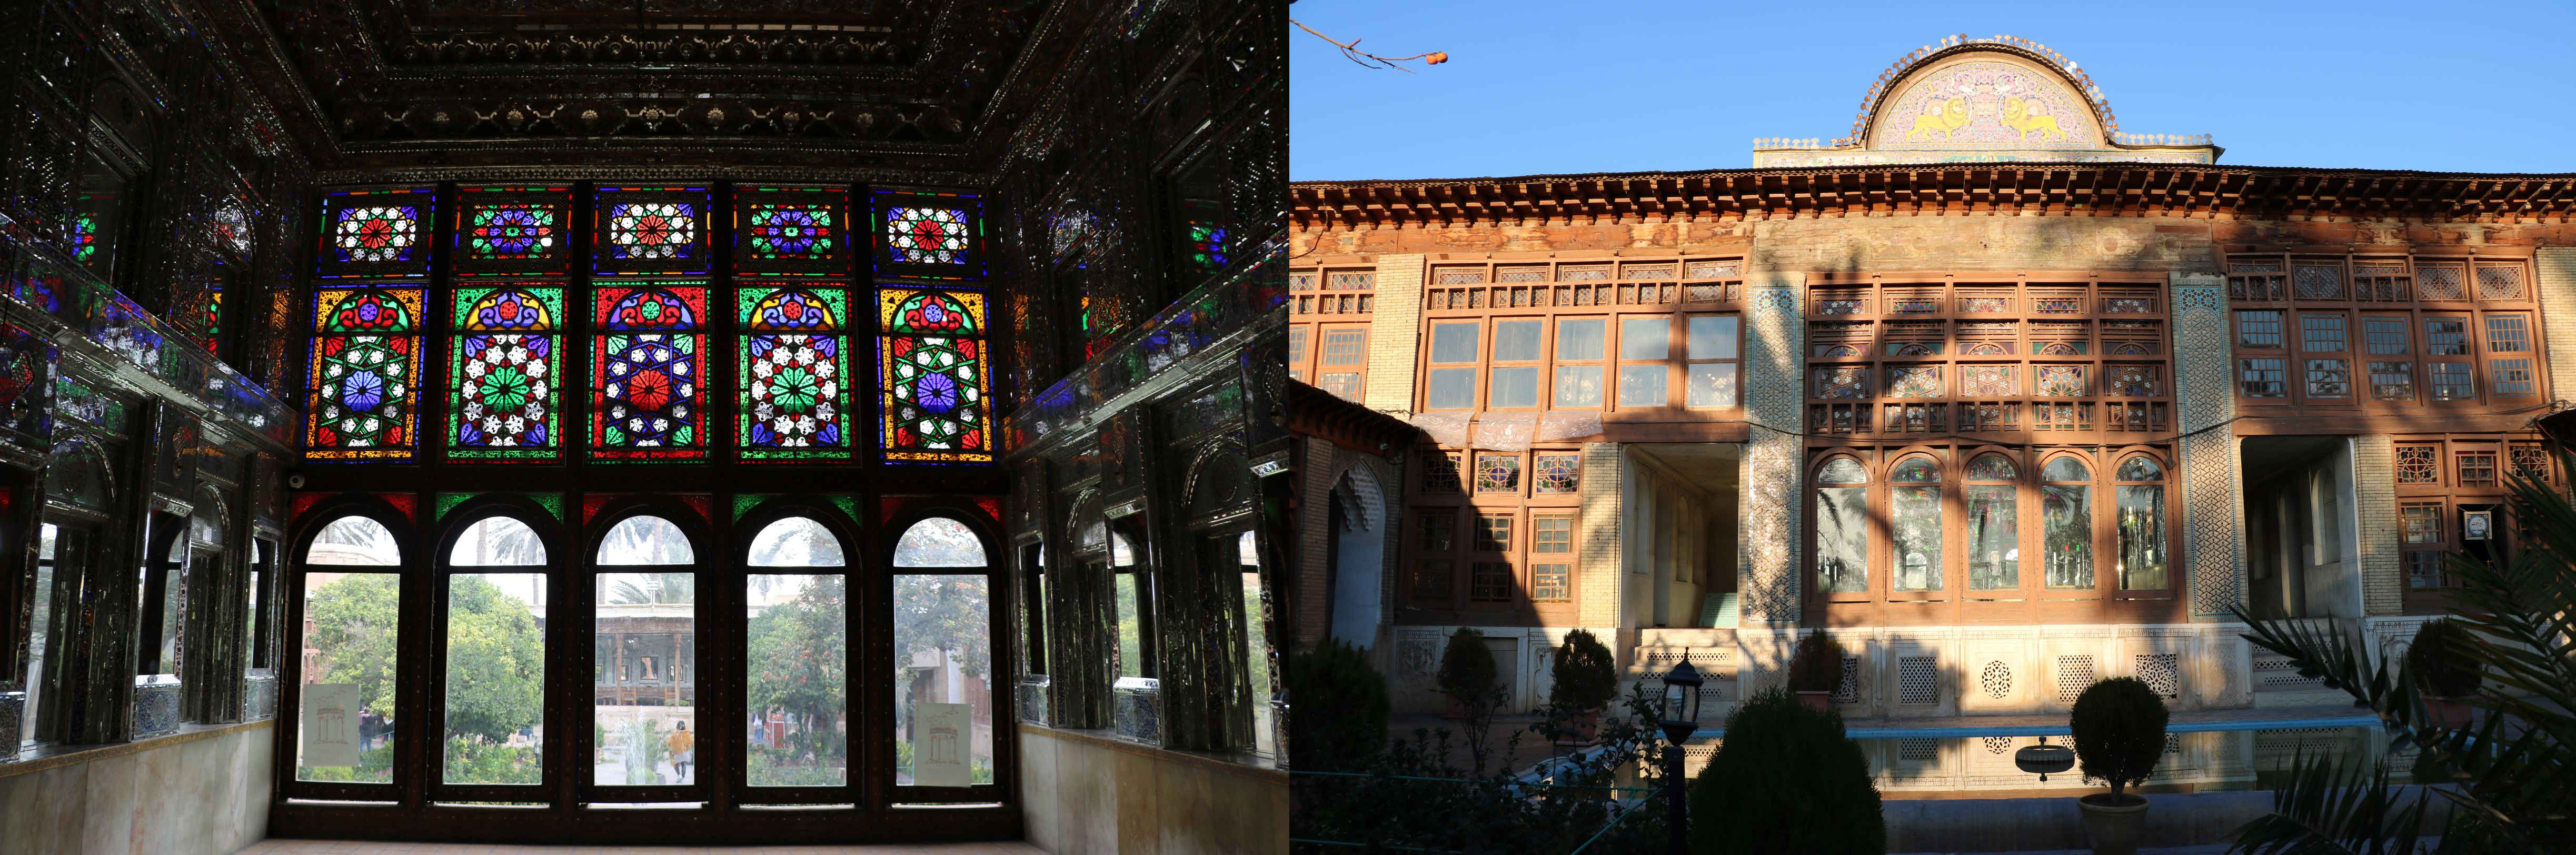 Orosi of Zinat-Al-Molk house Shiraz, Iran.